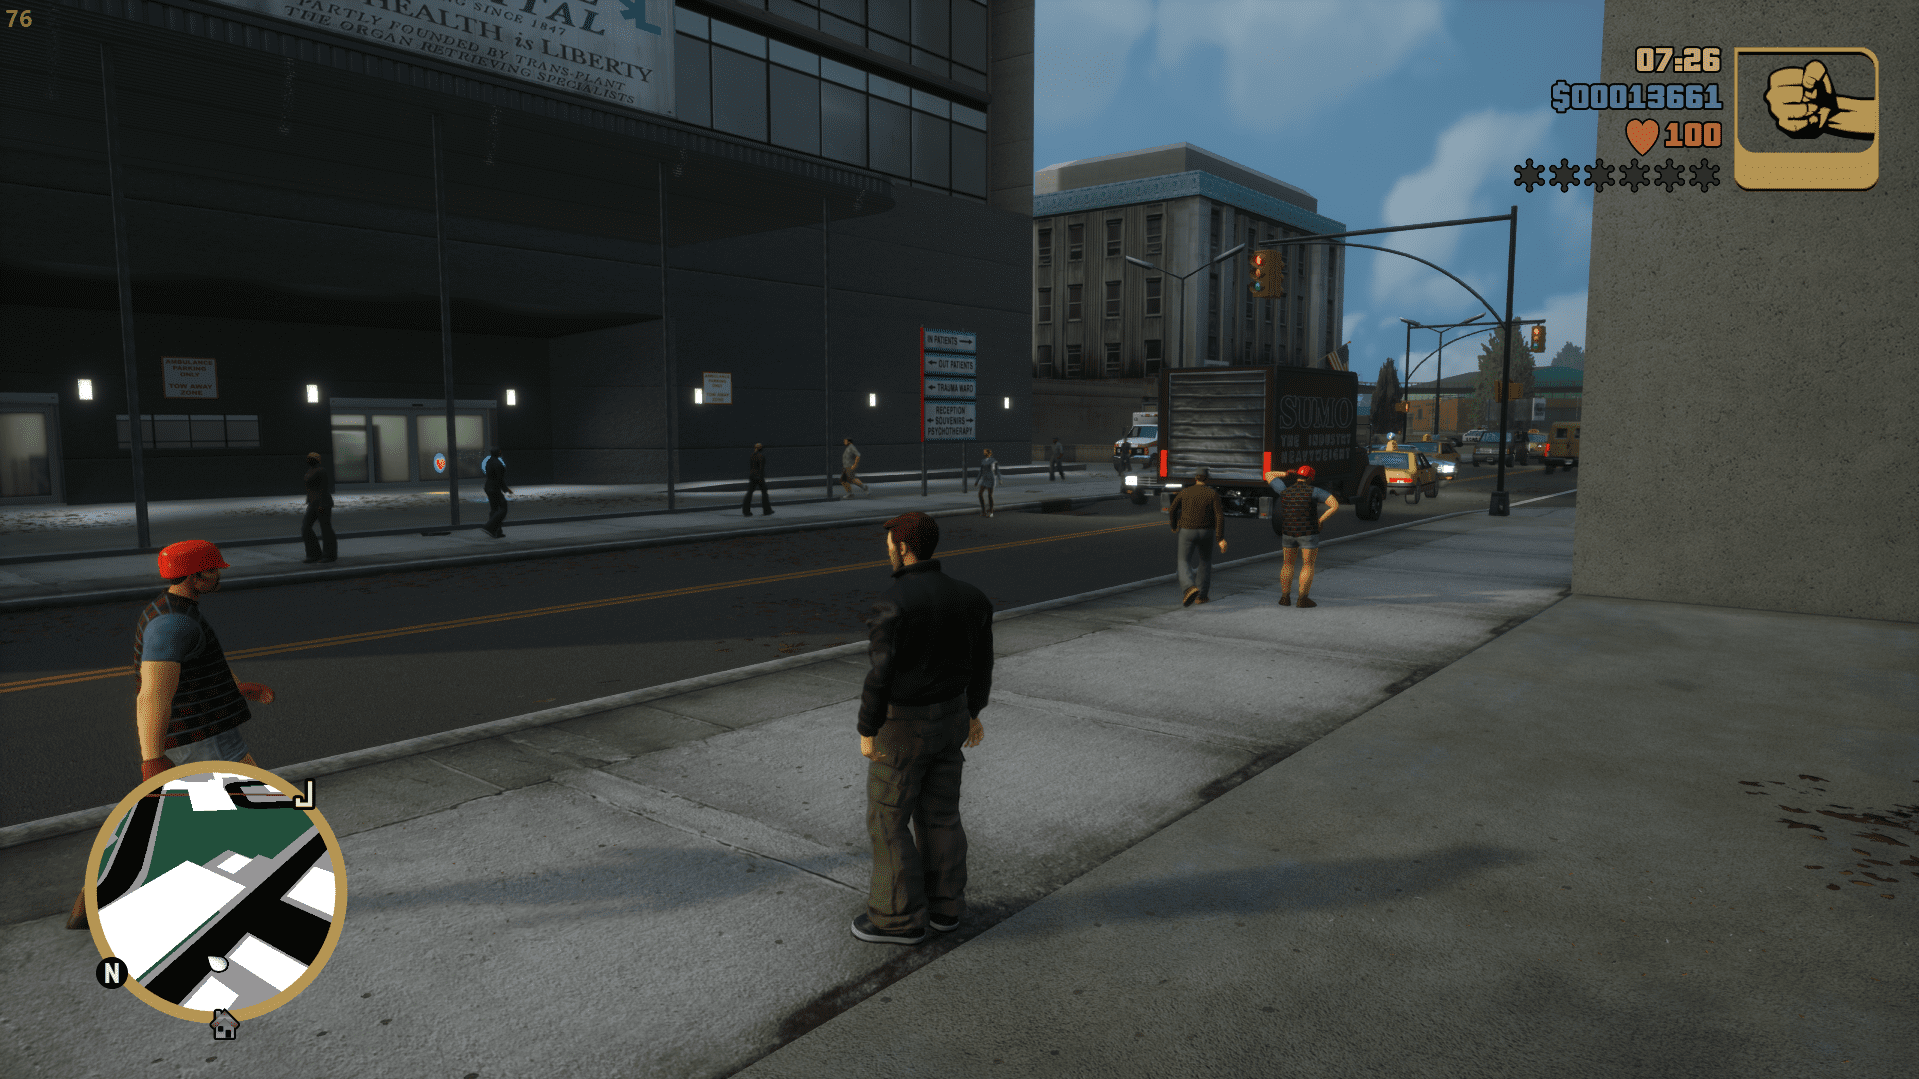 Grand Theft Auto III - The Definitive Edition - Optimization and FPS Boost Trilogy - Comparison | Порівняння - 79F18AF